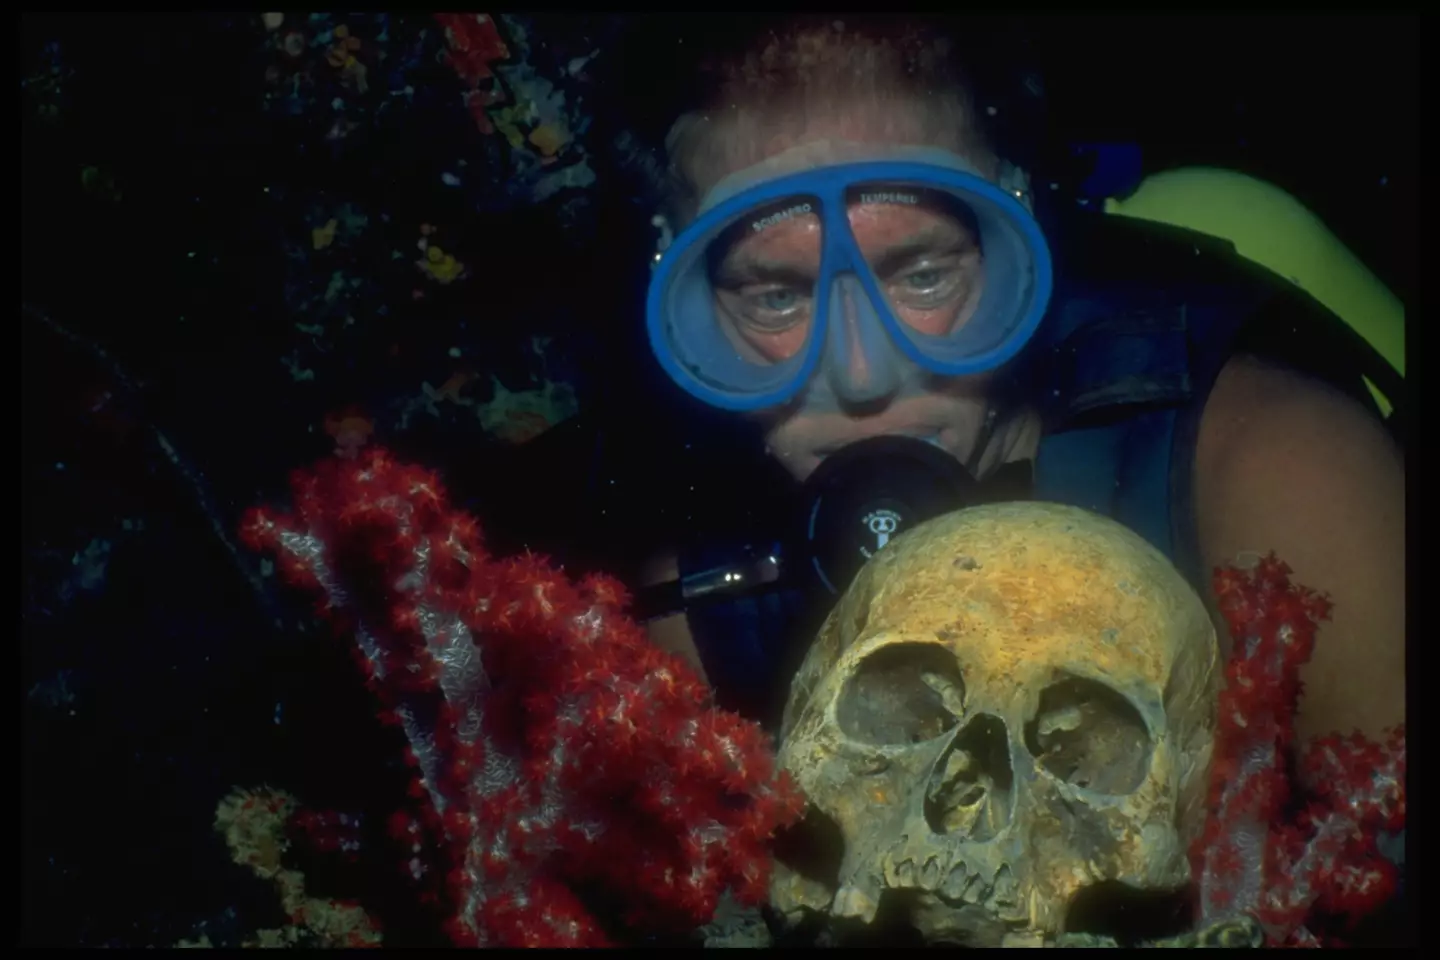 Chuuk Lagoon also contains human remains.